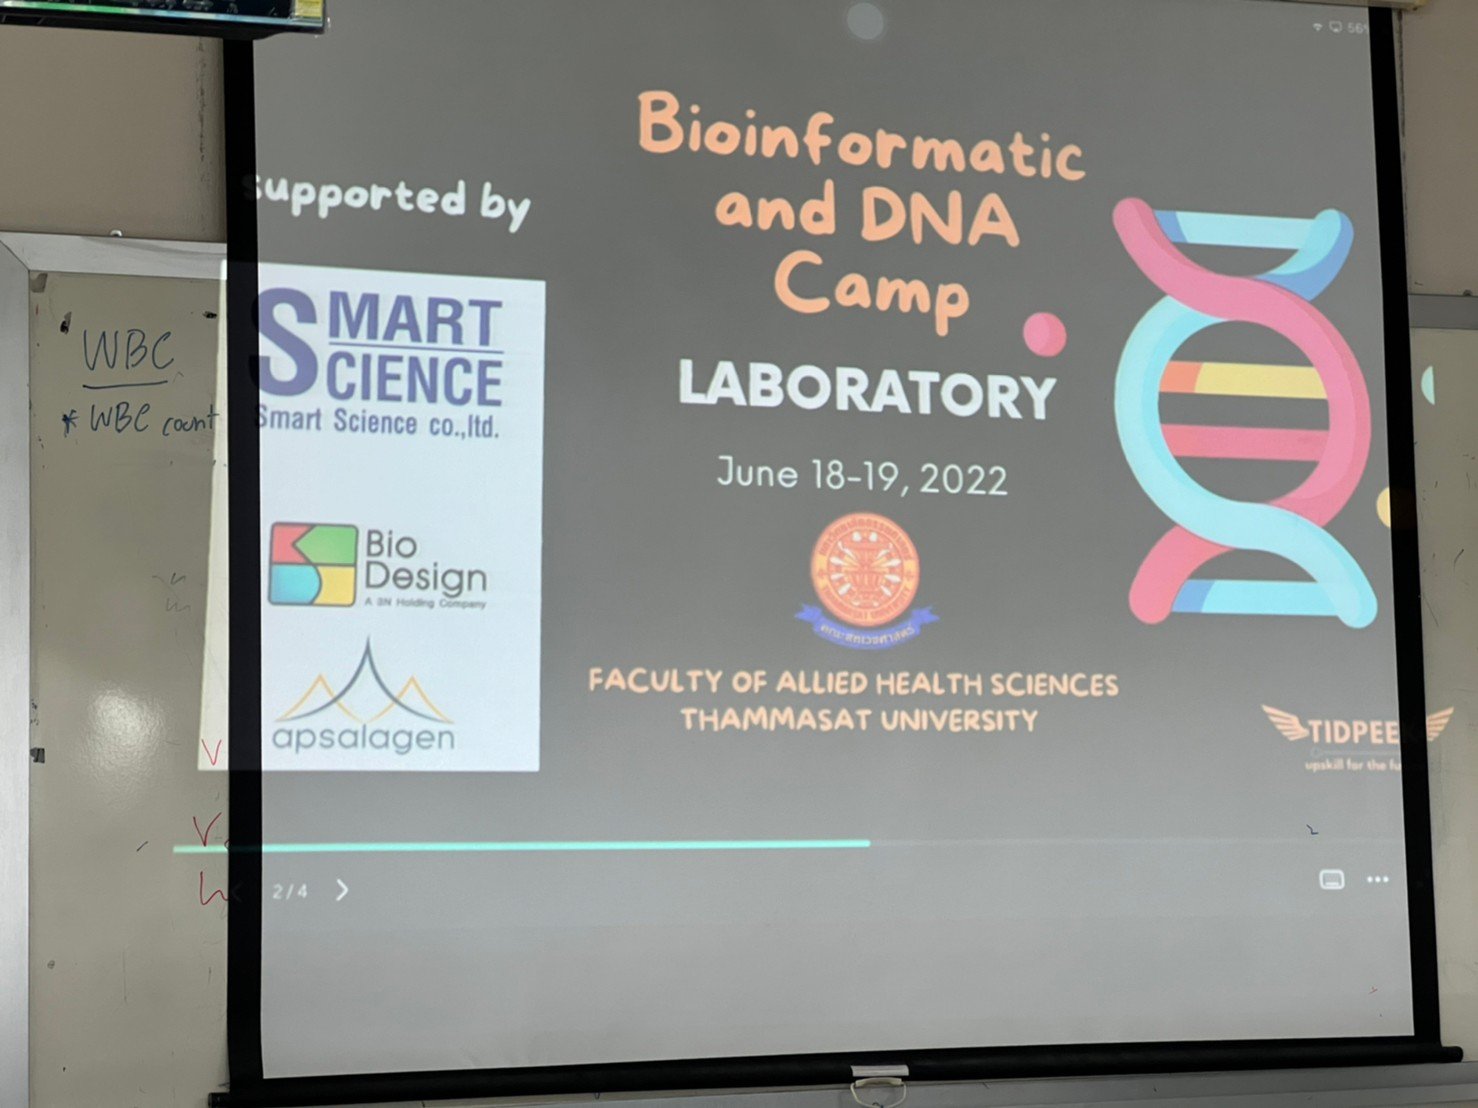 Bioinformatic and DNA LABORATORY